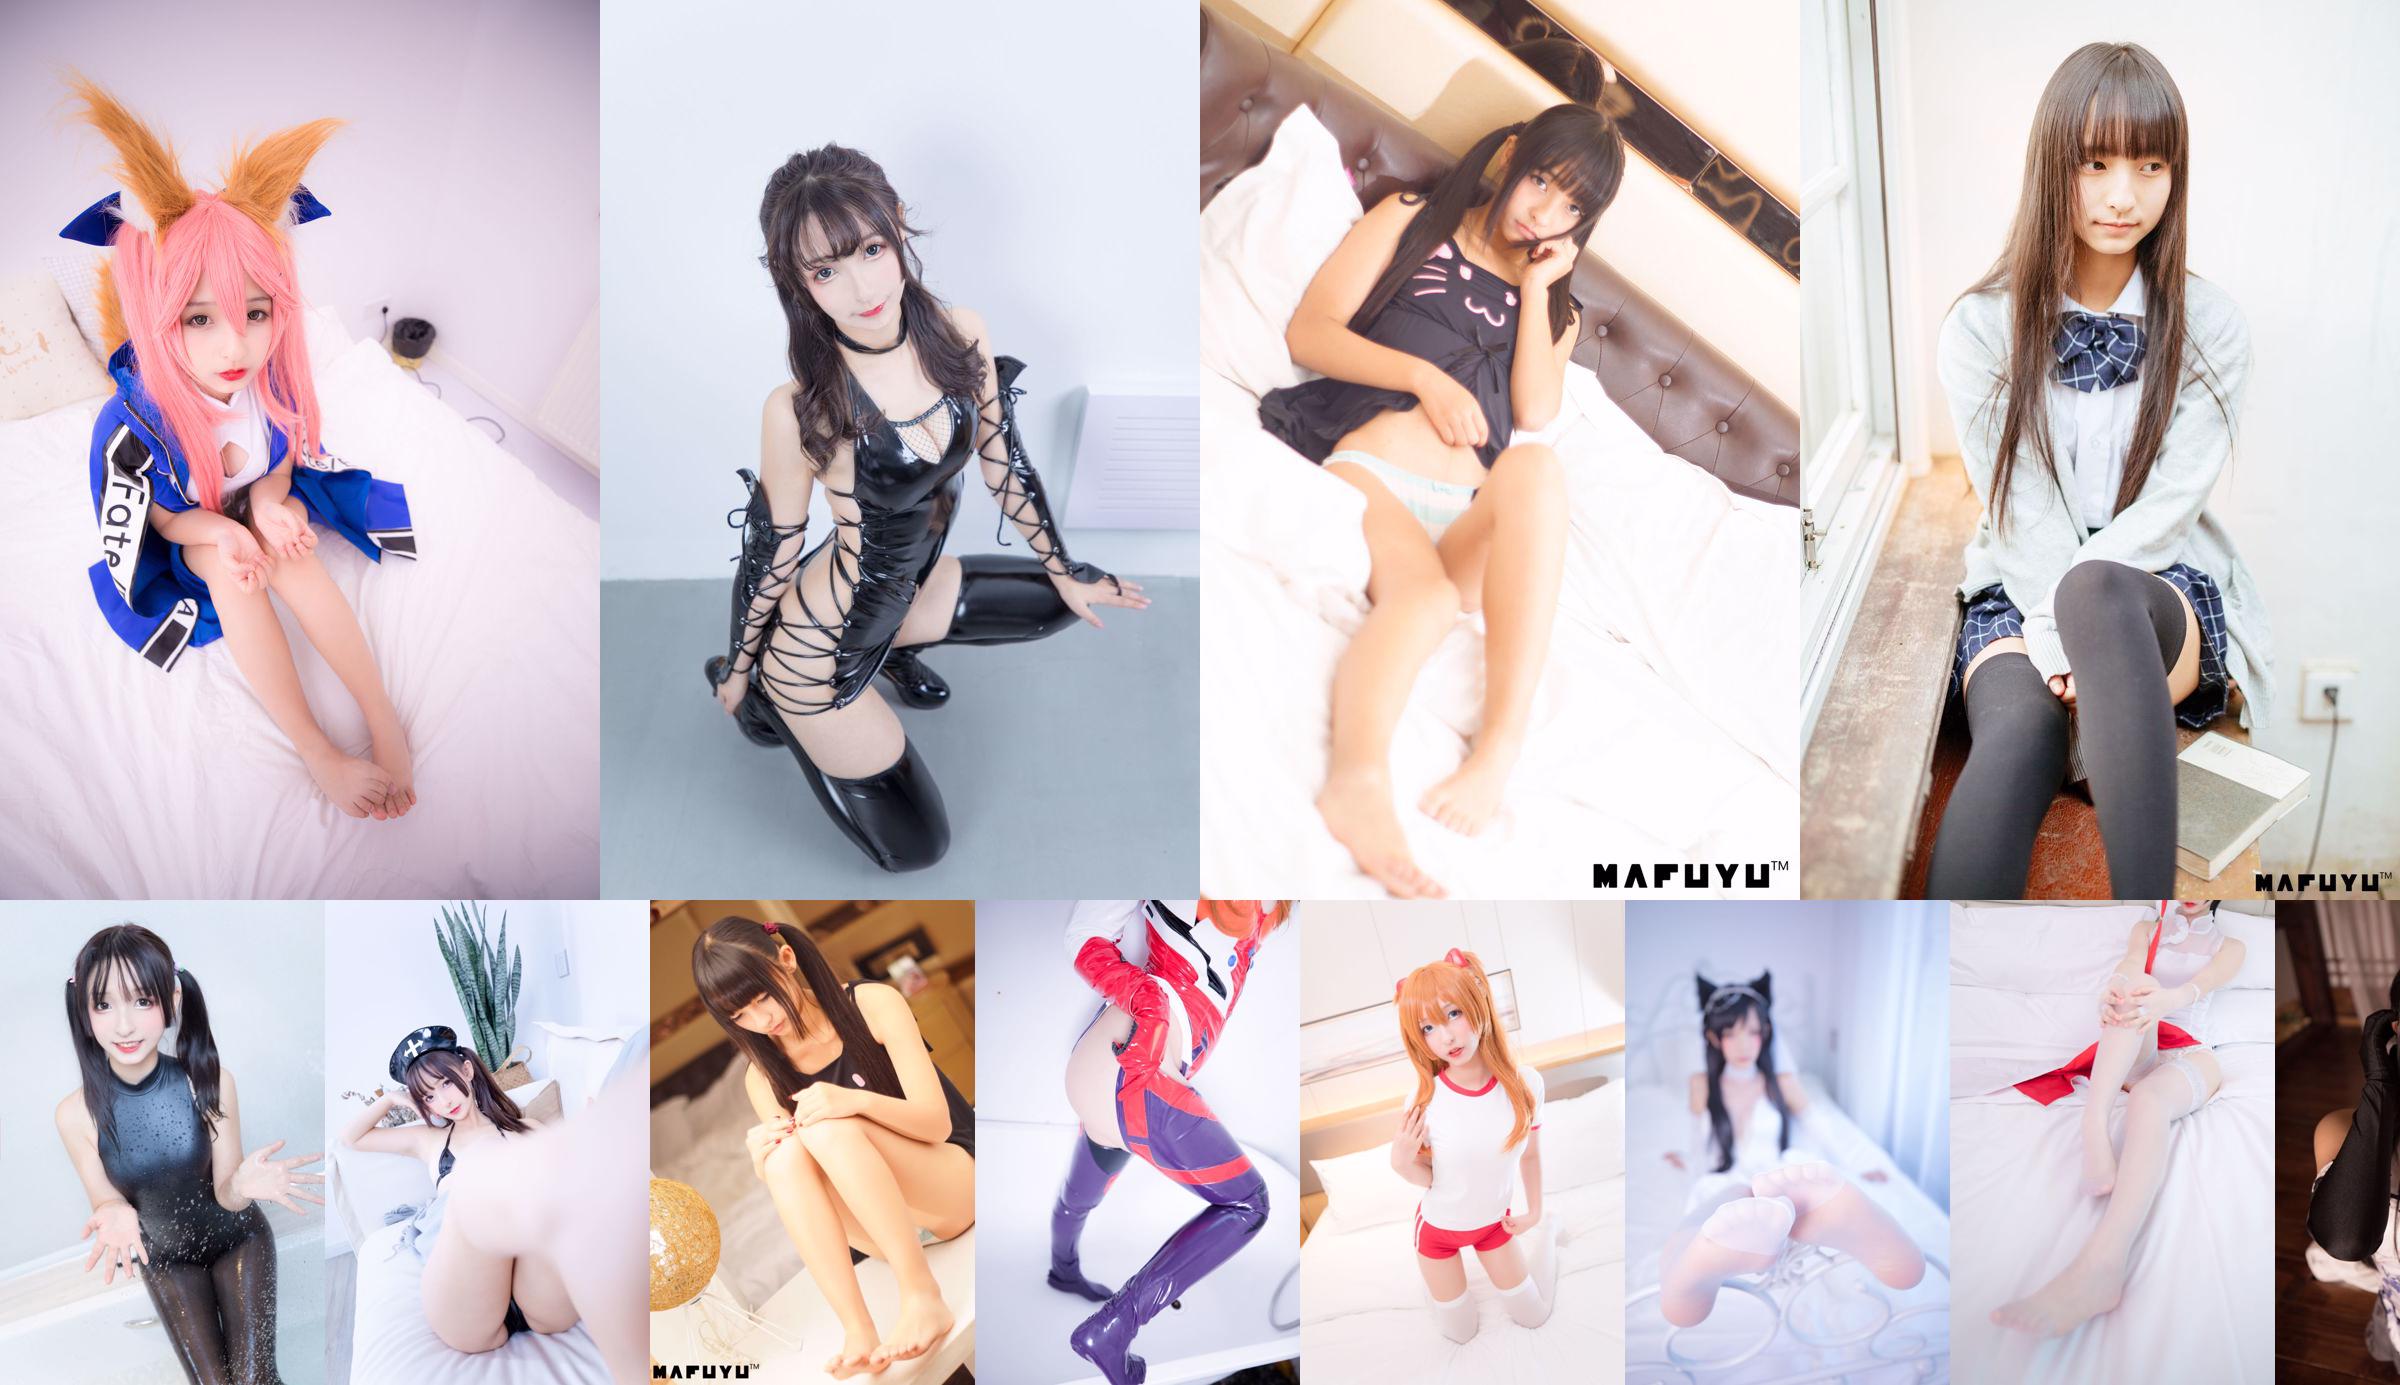 [Internet Celebrity COS] Lolita Sakura Ban Mafuyu Bear Girl No.4e143d Page 1